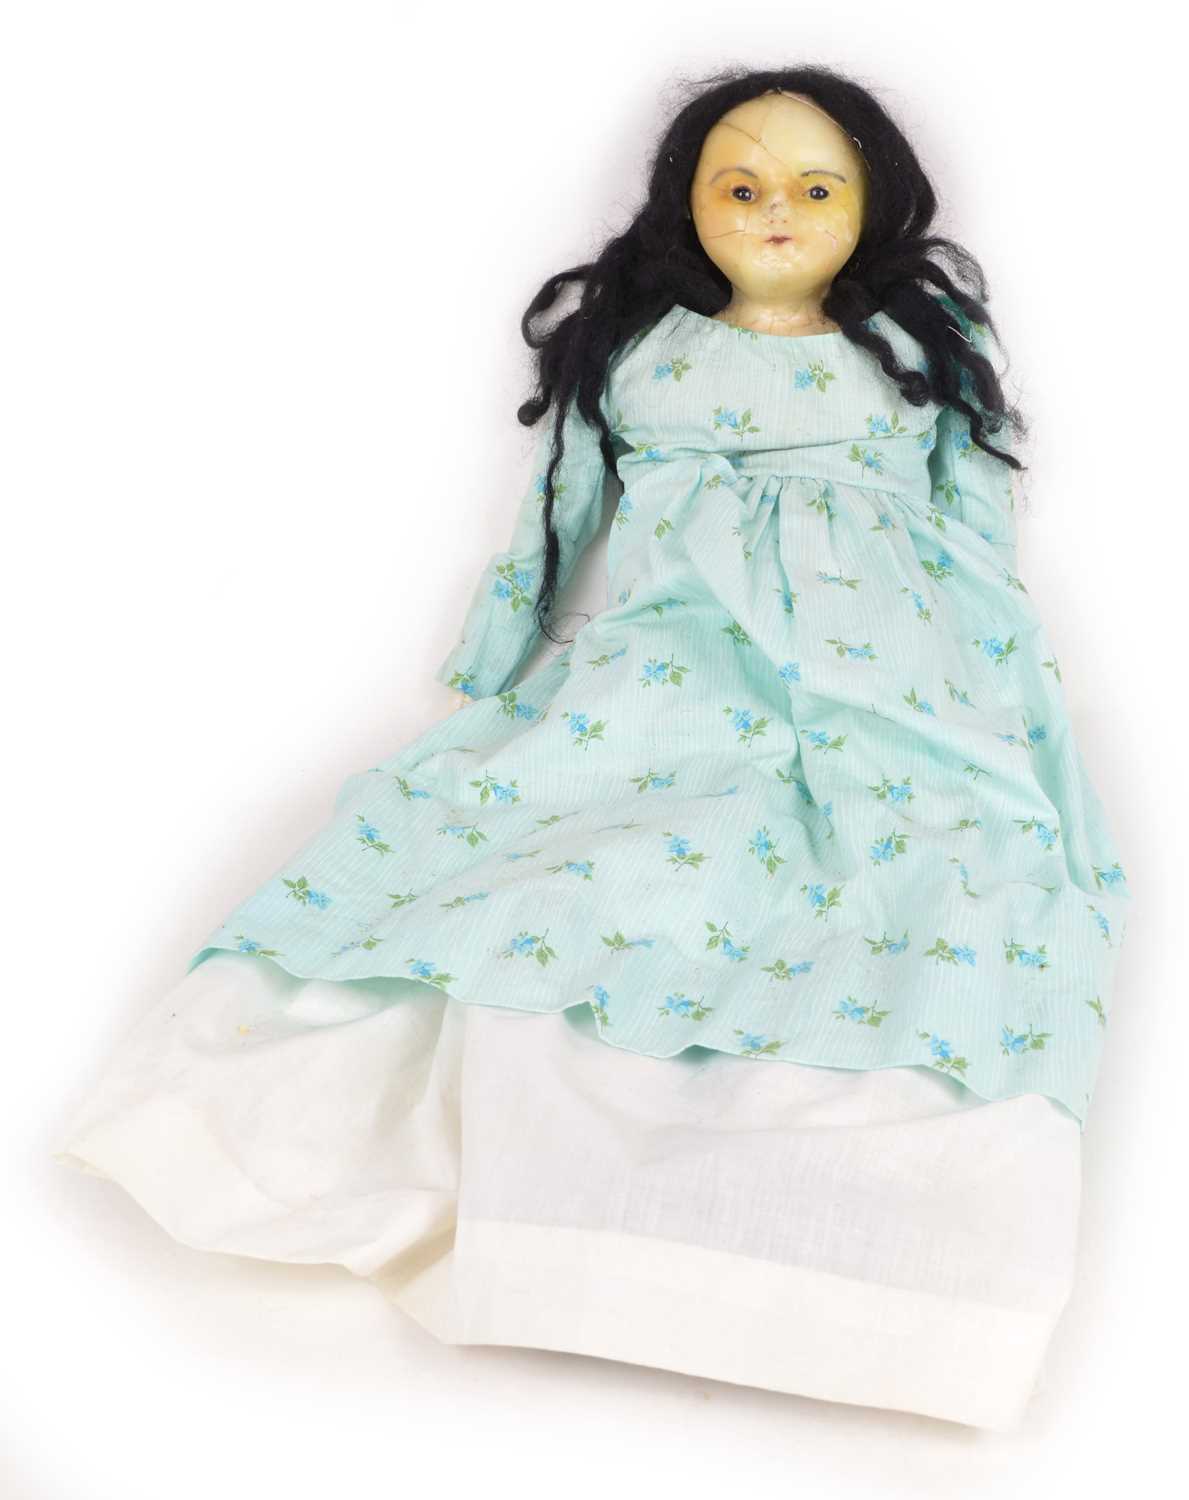 Lot 139 - Wax head doll with soft body